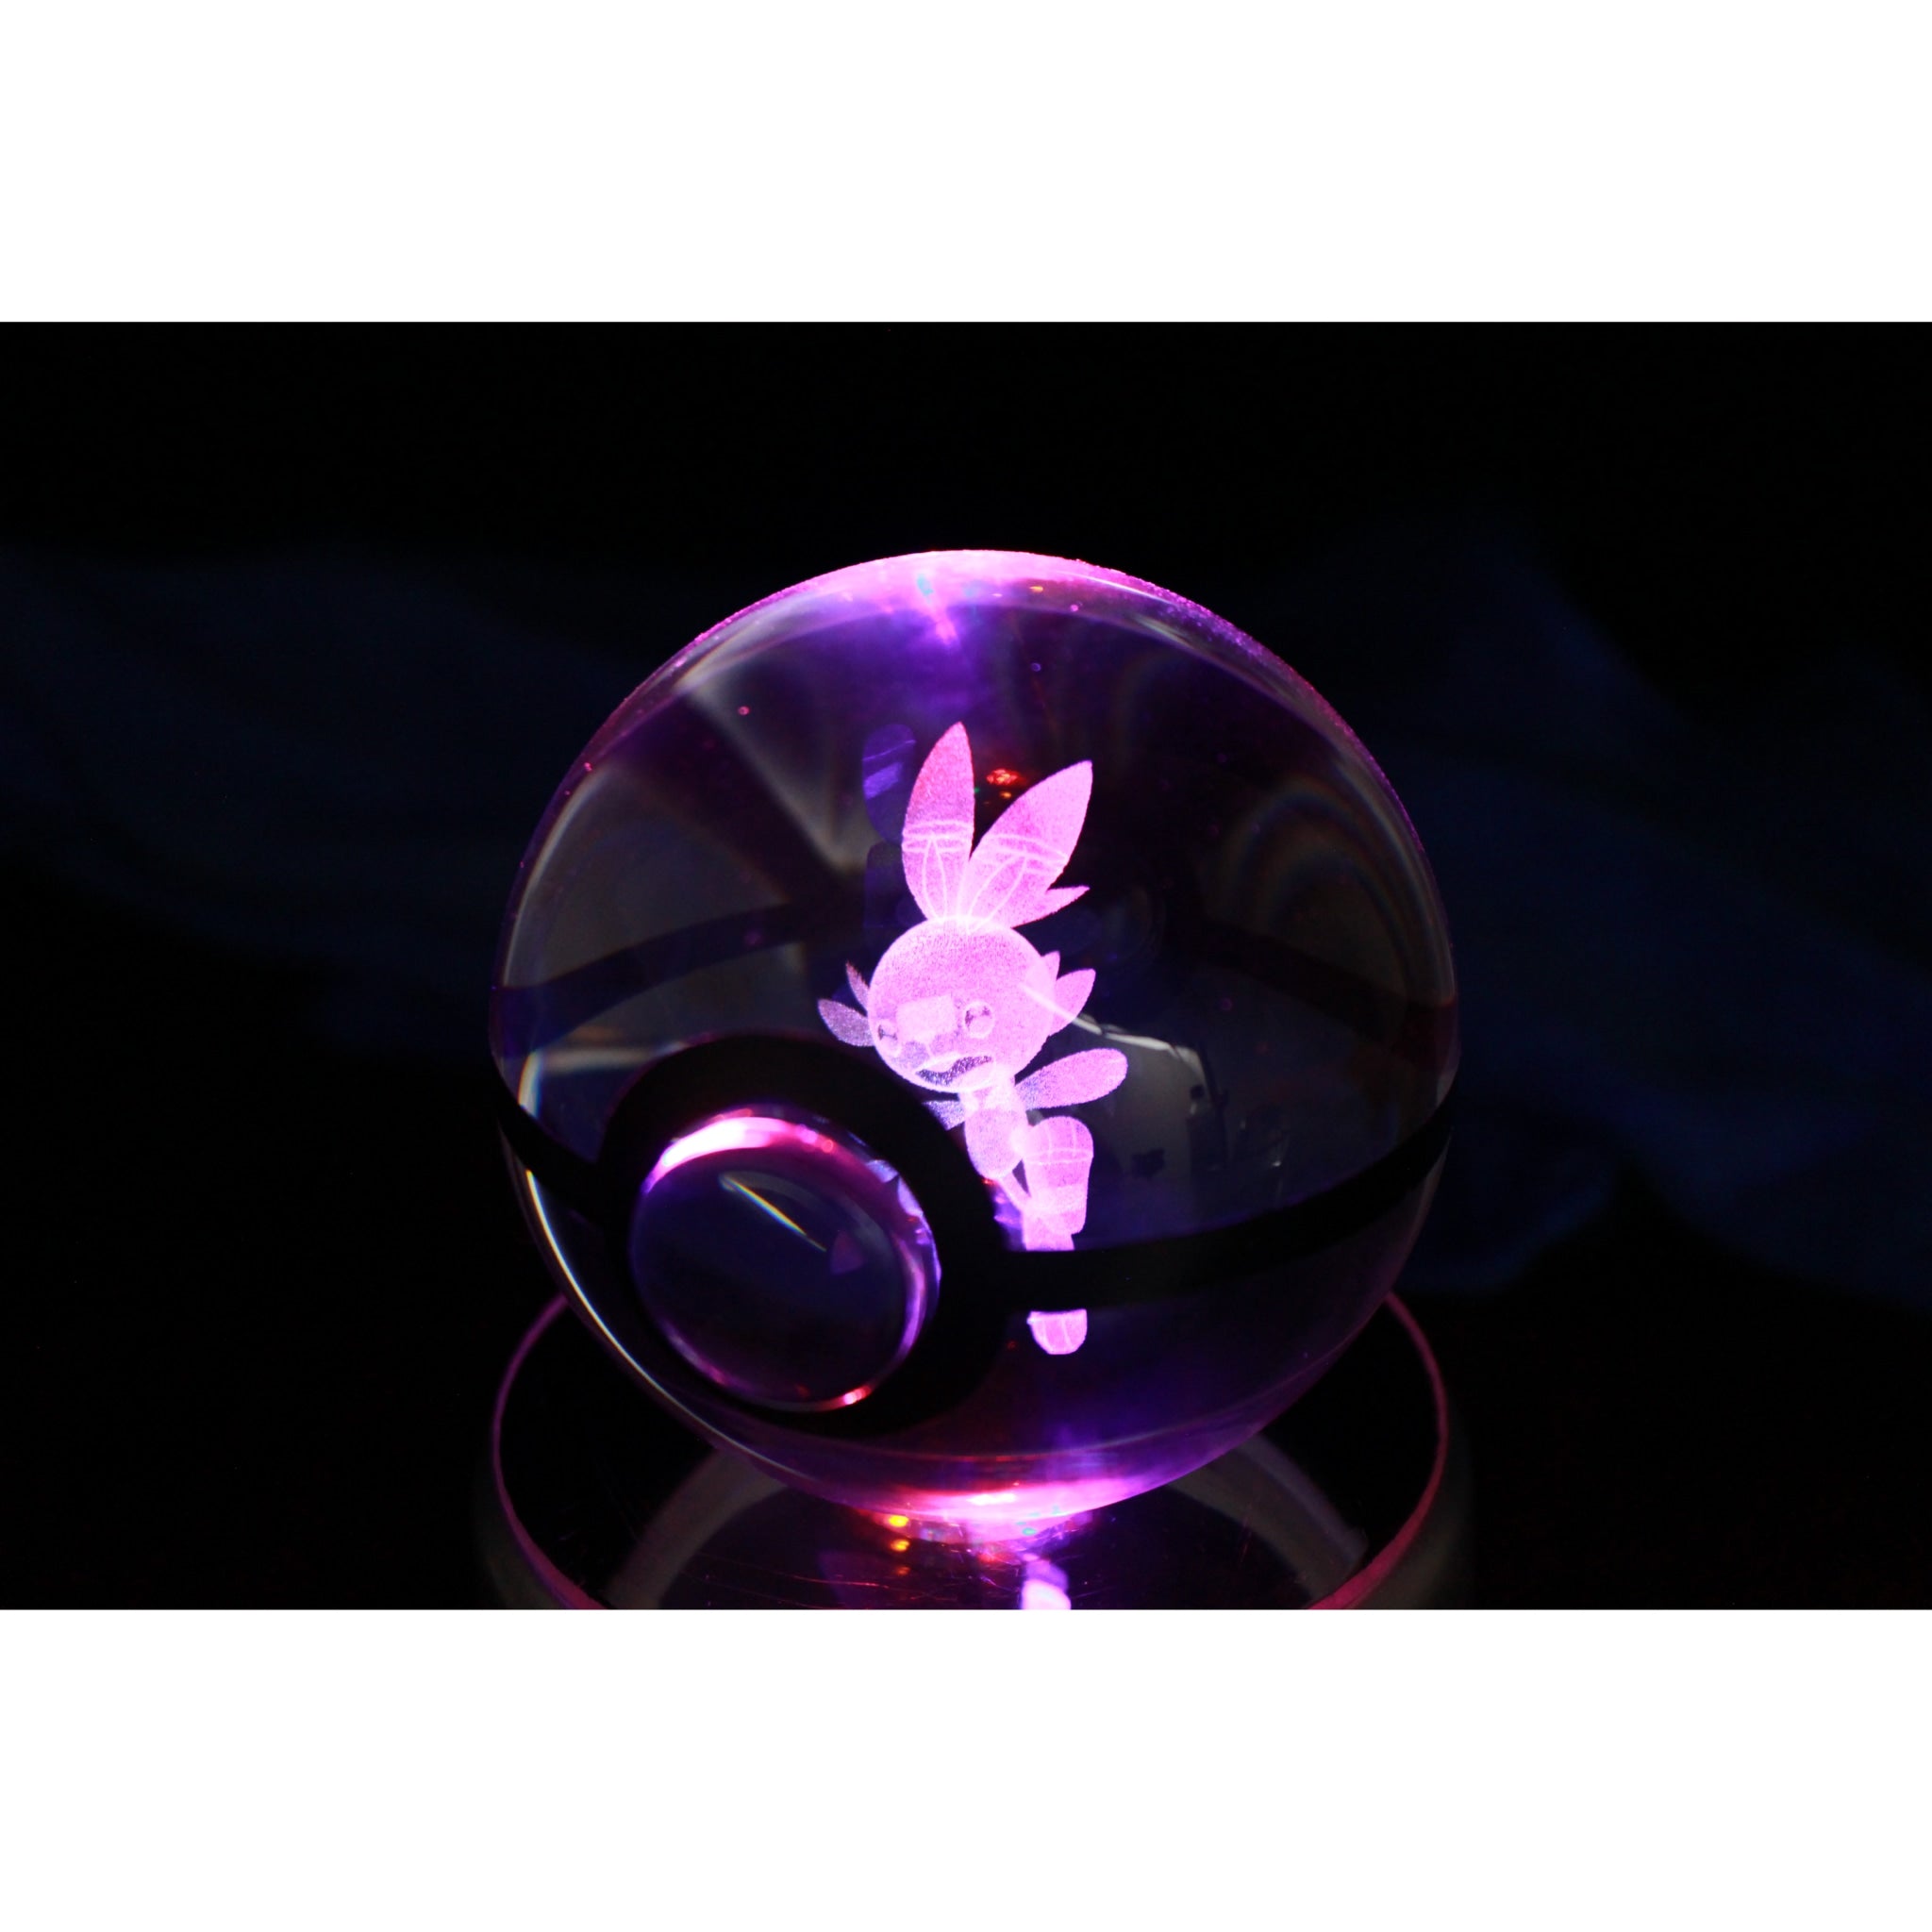 Scorbunny Pokemon Glass Crystal Pokeball 41 with Light-Up LED Base Ornament 80mm XL Size